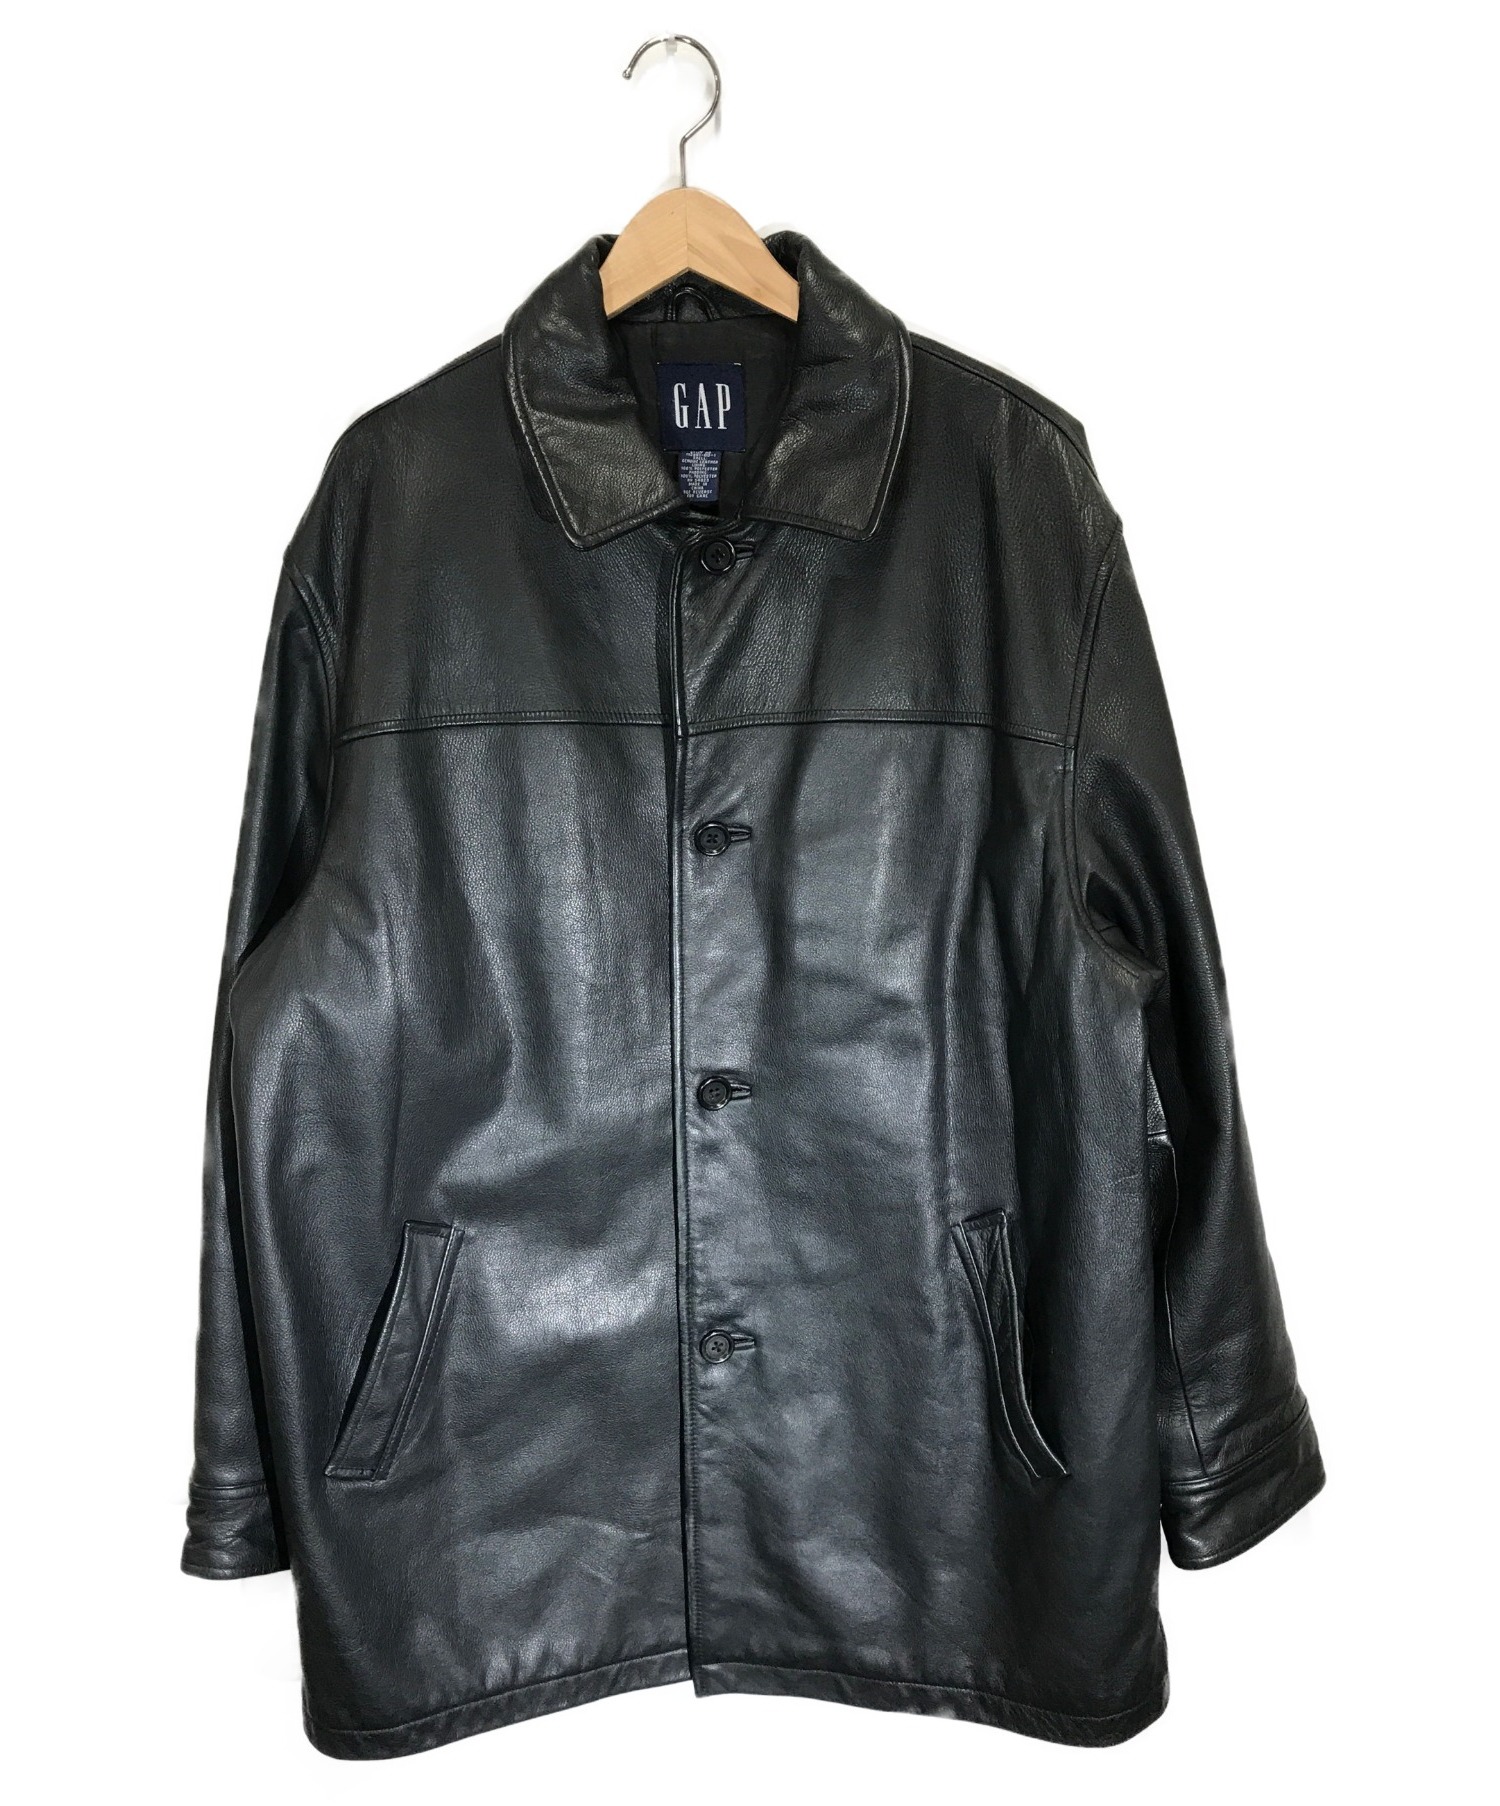 Old Gap leather jacket レザーカーコート sleeklooking.com